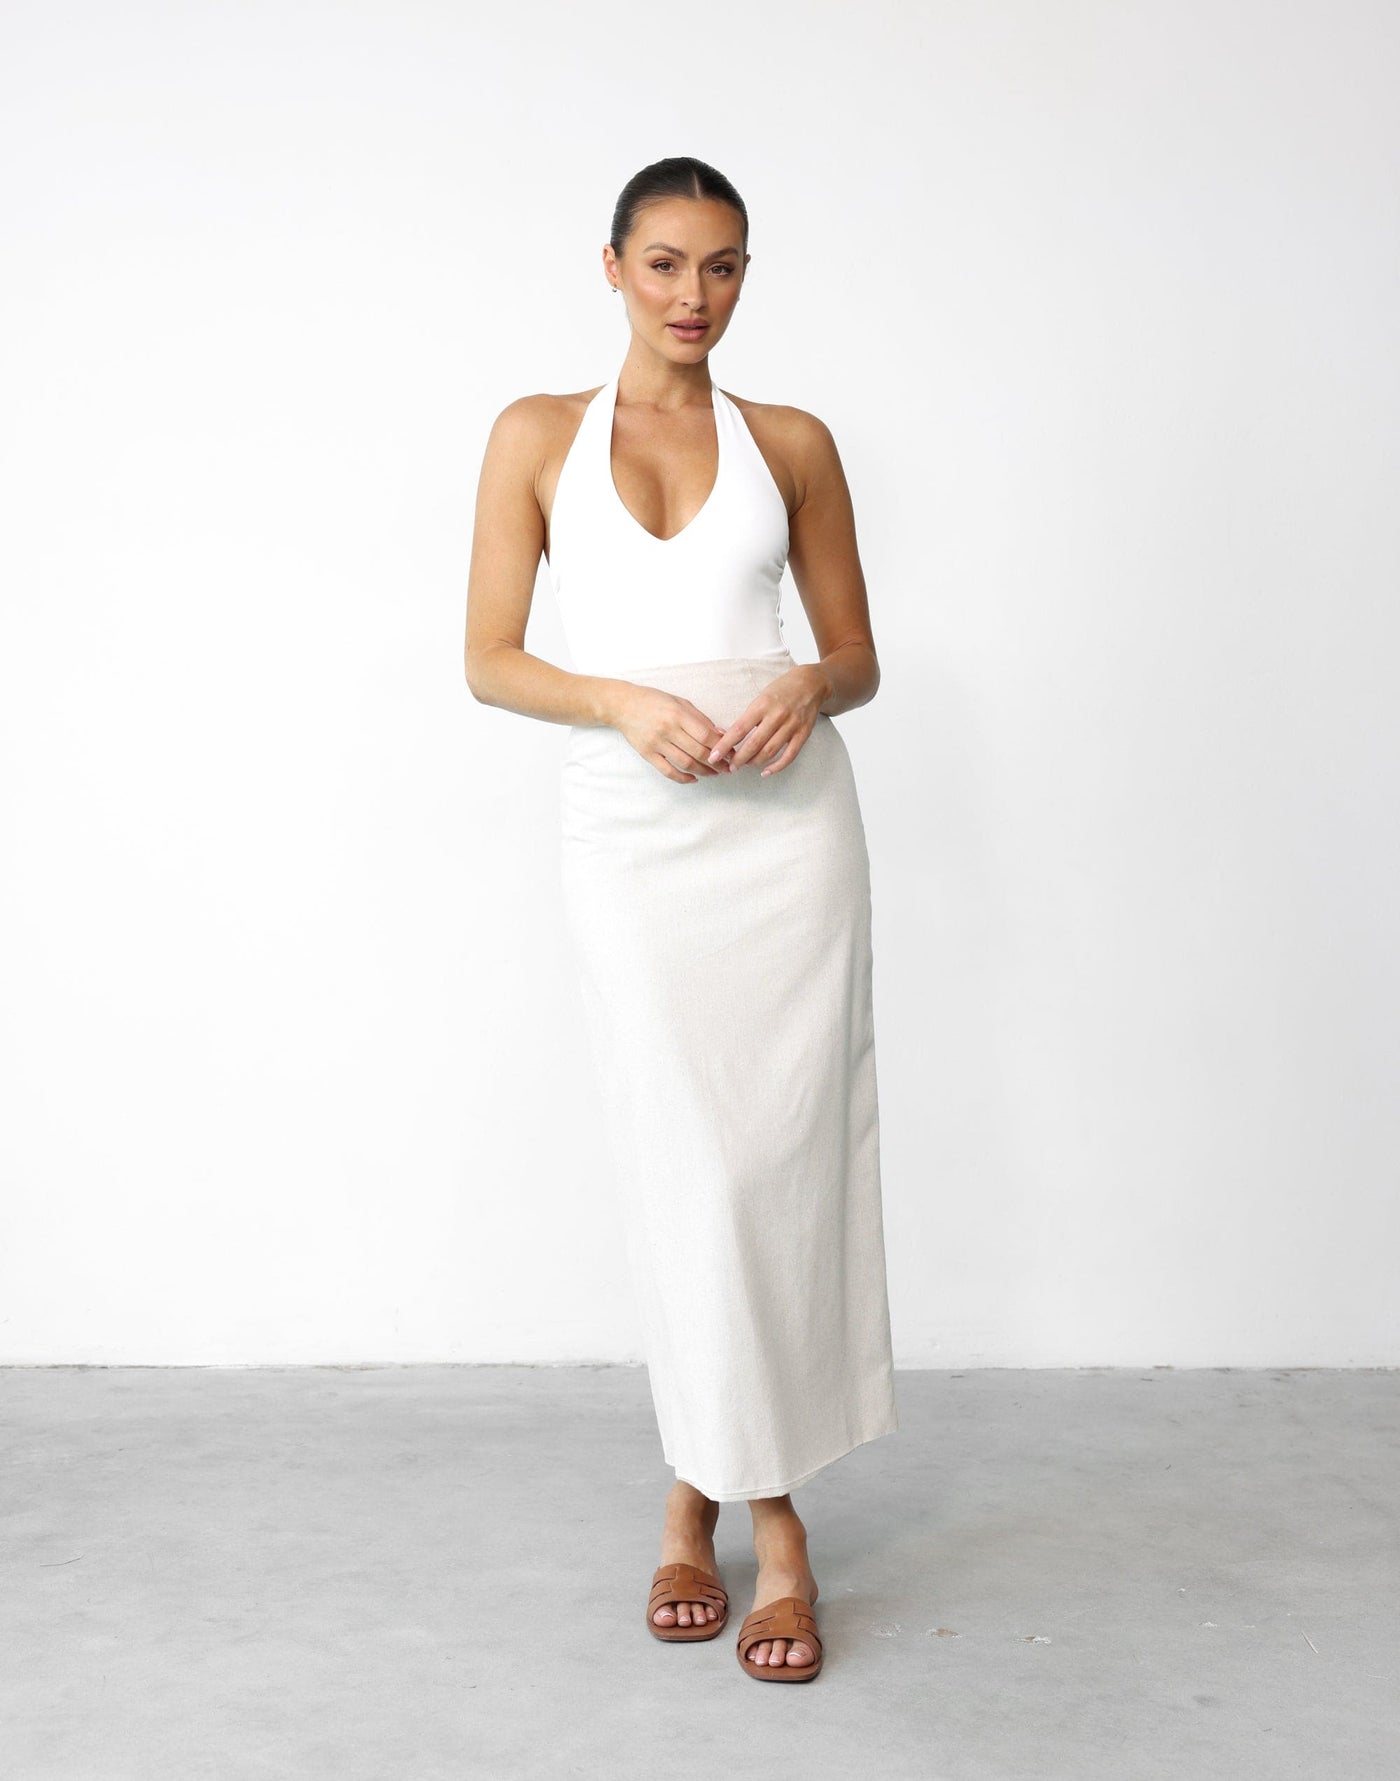 Amira Bodysuit (White) - Low Back Halter Neck Bodysuit - Women's Top - Charcoal Clothing